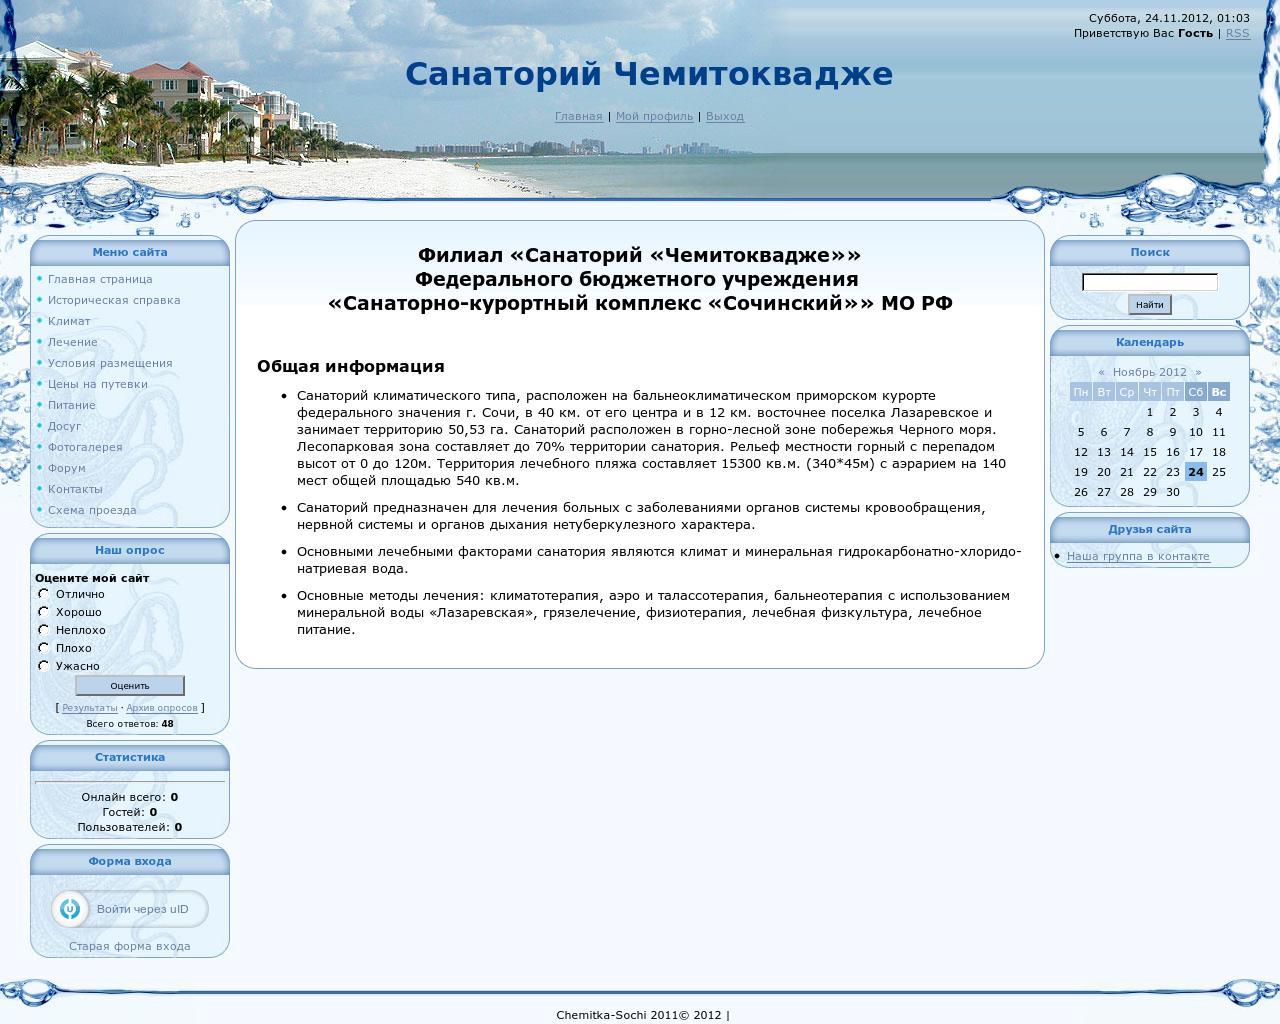 Изображение сайта chemitka-sochi.ru в разрешении 1280x1024